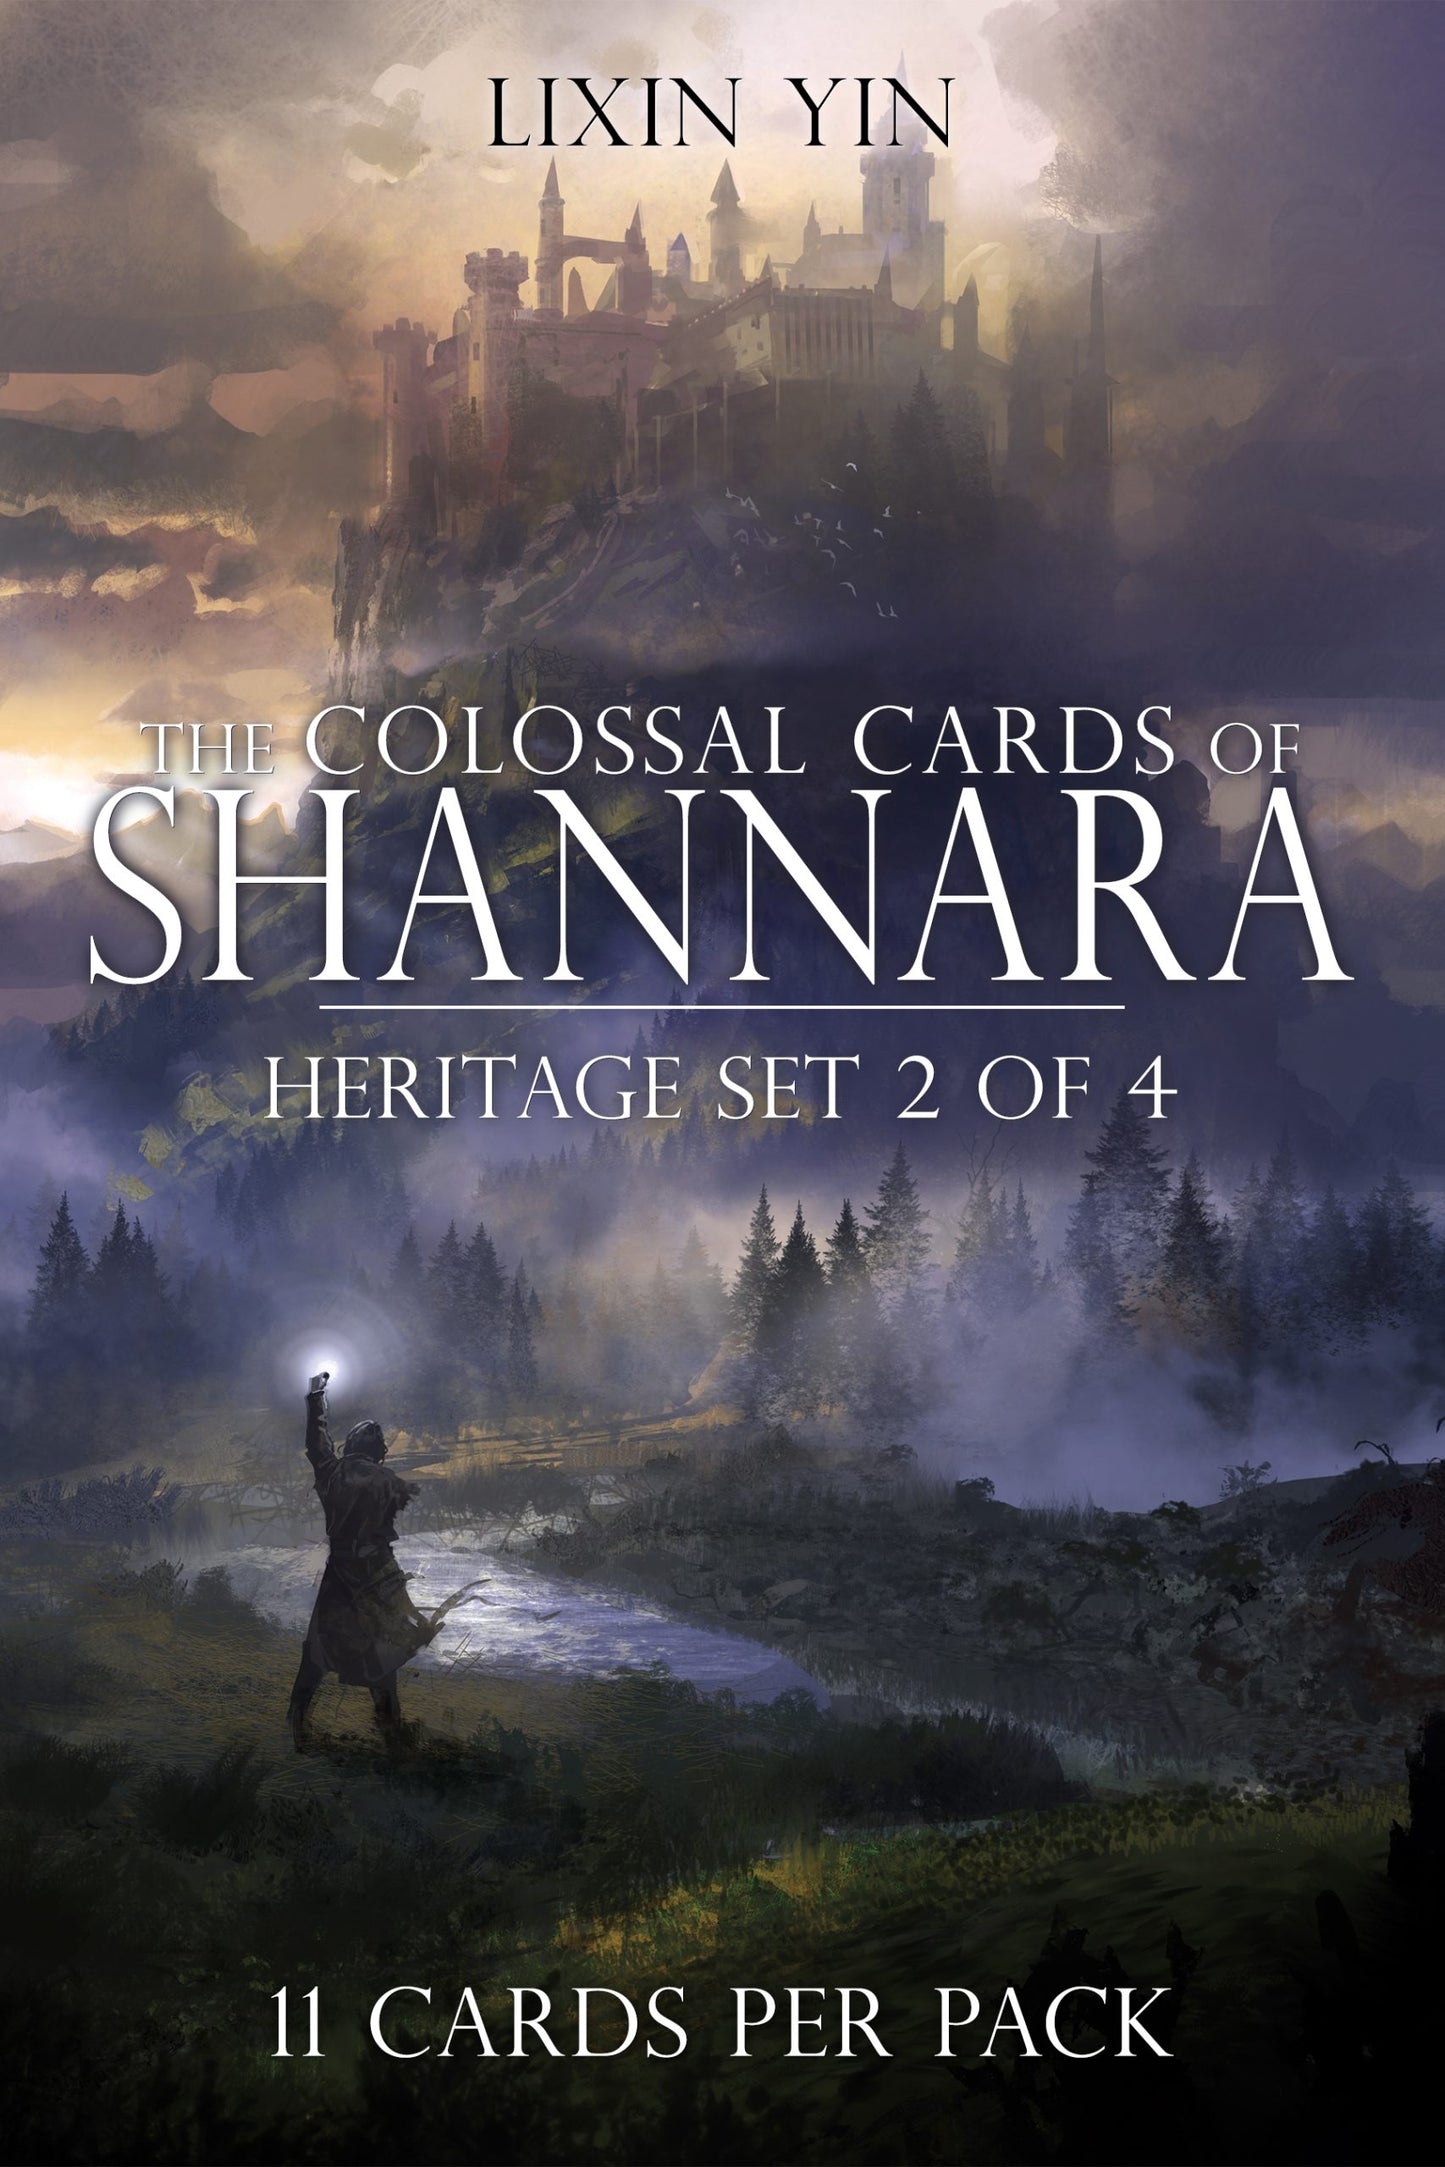 Art Portfolio: The Druid of Shannara